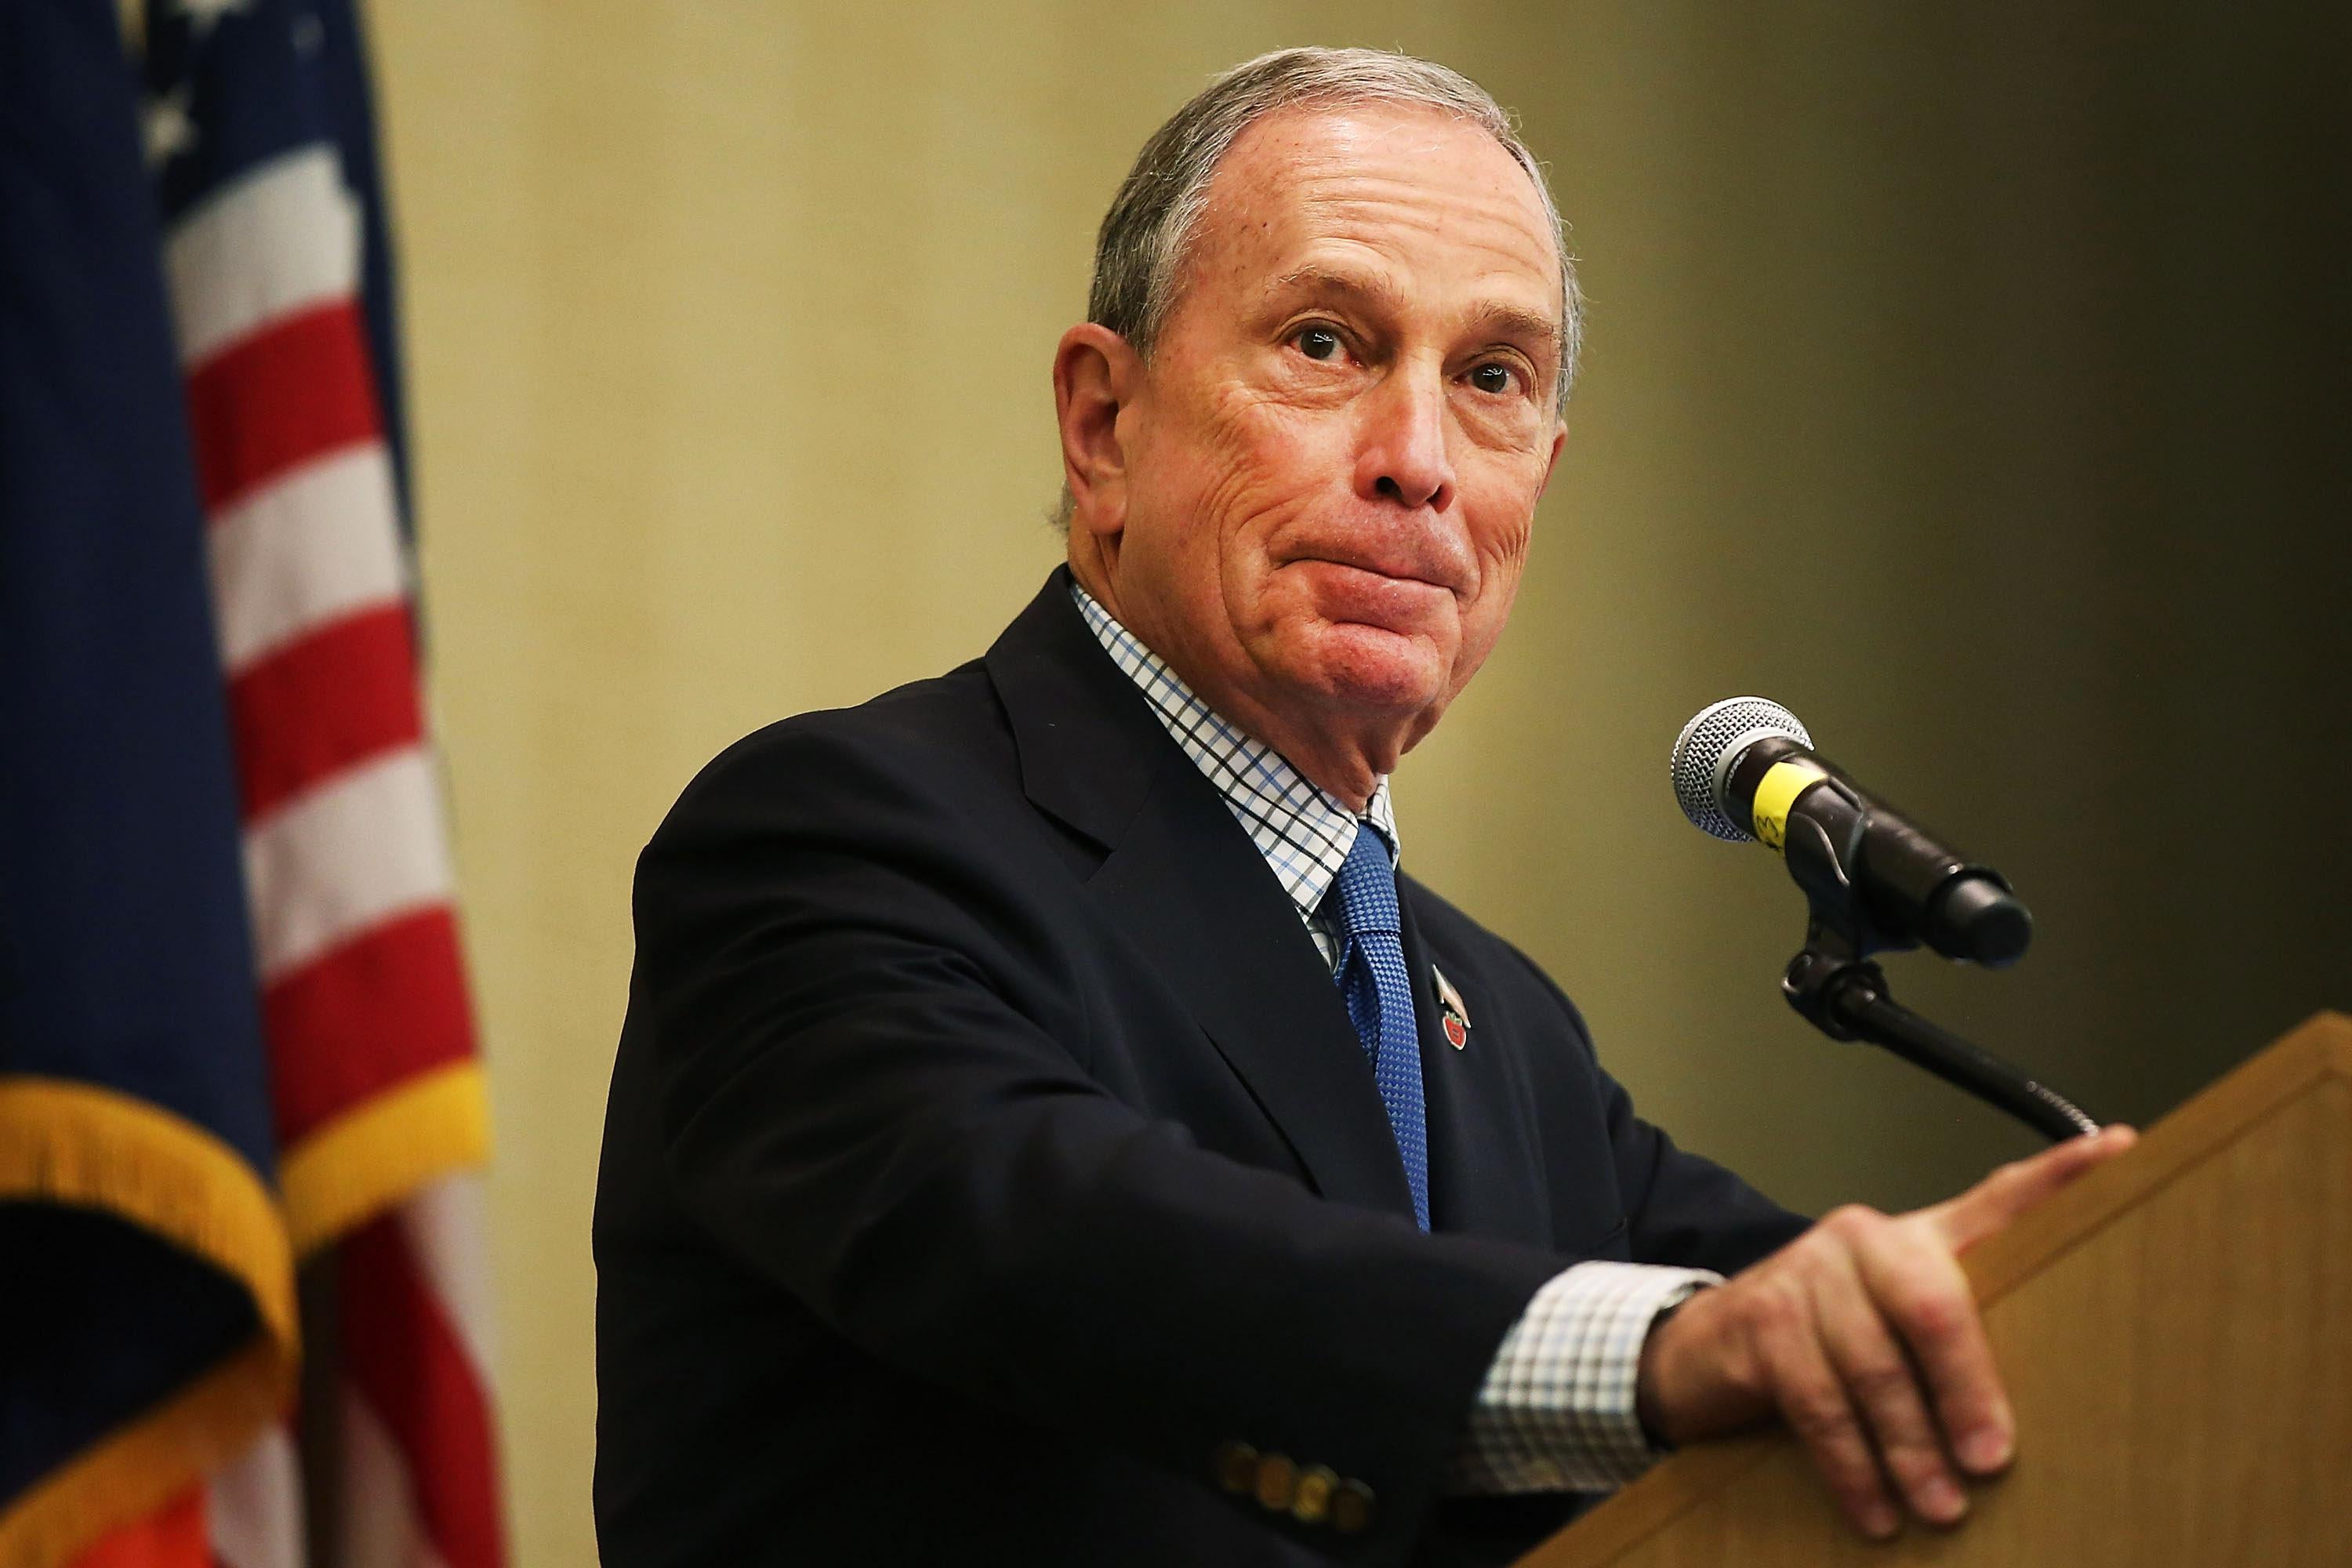 Michael Bloomberg at a podium.